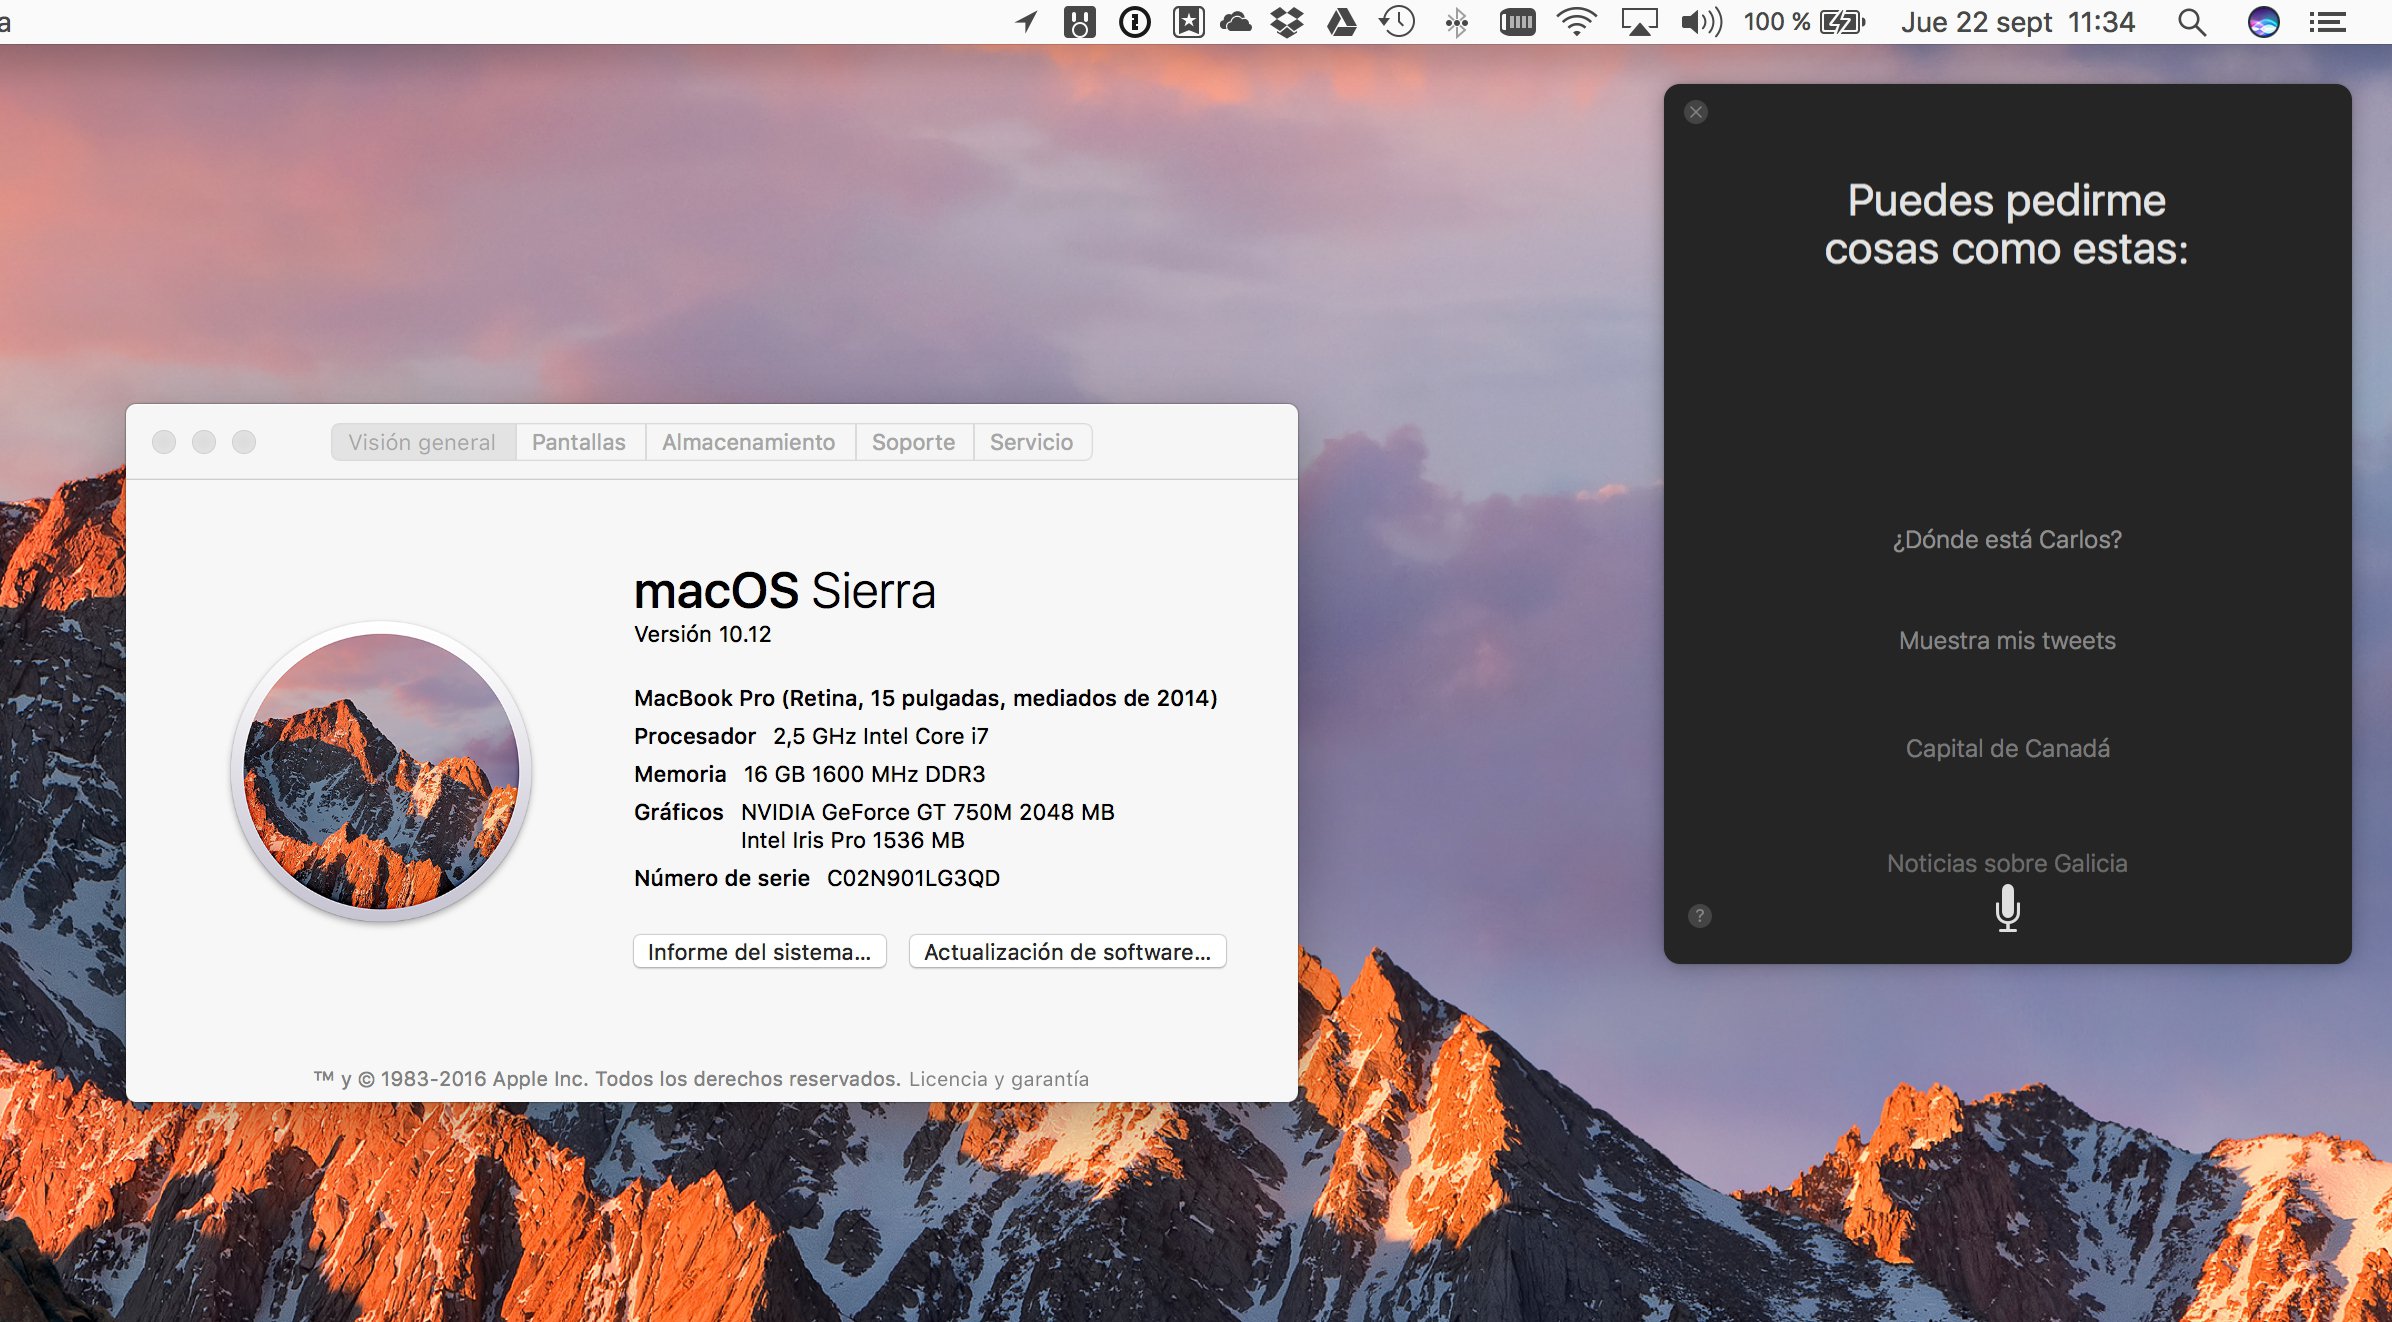 which adobe do i need for mac os sierra 10.12.6